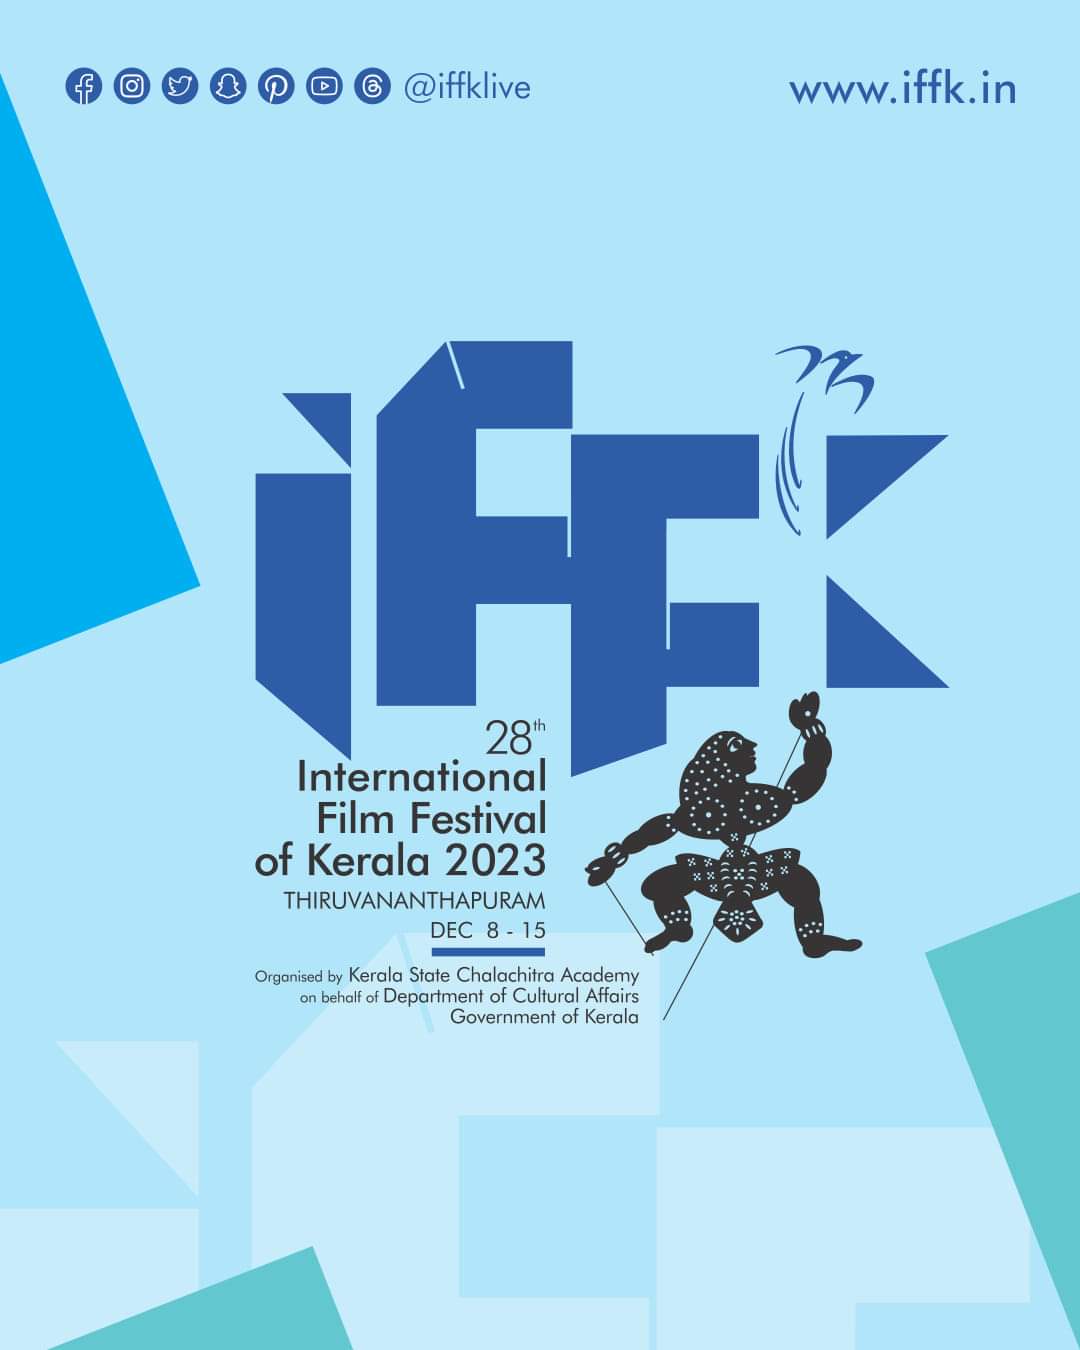 IFFK 2023  IFFK 2023 Official Design launched  രാജ്യാന്തര ചലച്ചിത്ര മേള  ചലച്ചിത്ര മേളയുടെ ഔദ്യോഗിക ഫെസ്‌റ്റിവല്‍ ഡിസൈന്‍  IFFK 2023 Official Design  രാജ്യന്തര ചലച്ചിത്ര മേളയുടെ ഔദ്യോഗിക ഡിസൈൻ  Malayalam Cinema Today in IFFK 2023  International Competition movies in IFFK 2023  India Cinema Now movies  രാജ്യന്തര ചലച്ചിത്ര മേള 2023  ഐഎഫ്‌എഫ്‌കെ 2023